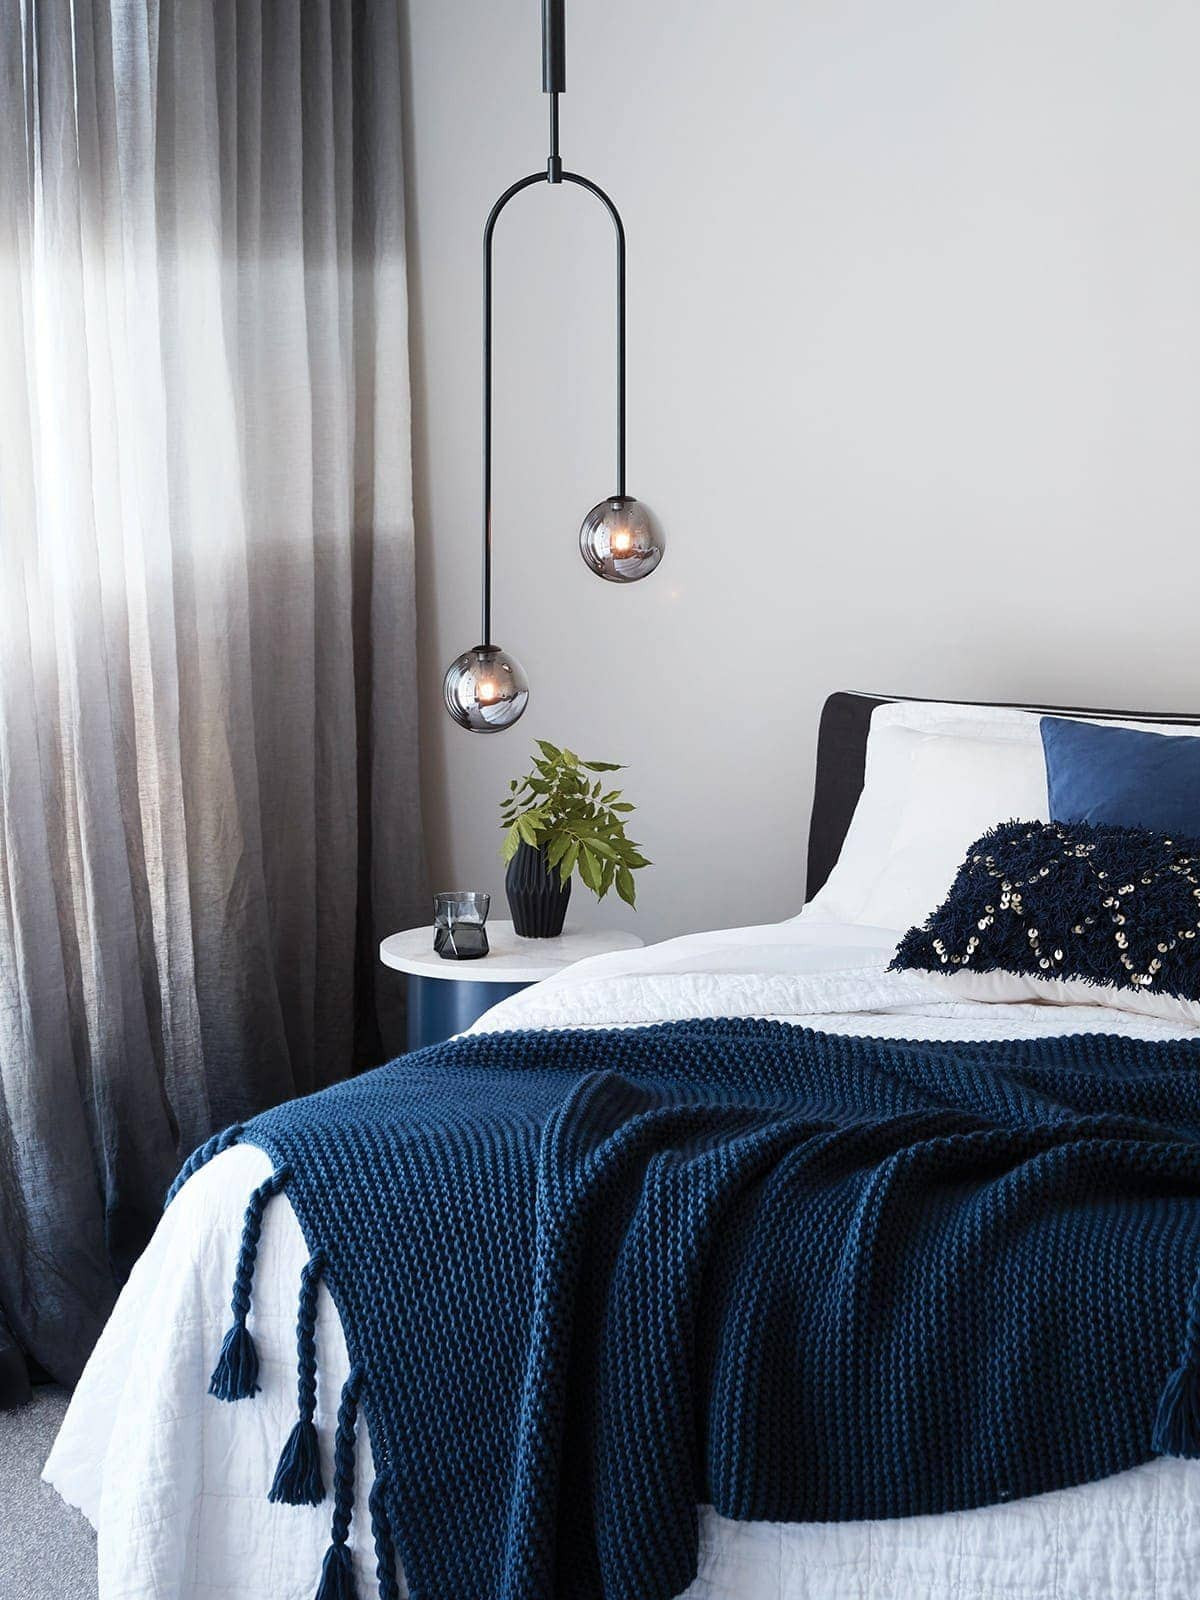 Hanging Lights For Bedroom
 Cheats on Choosing Pendant Lights for a Master Bedroom